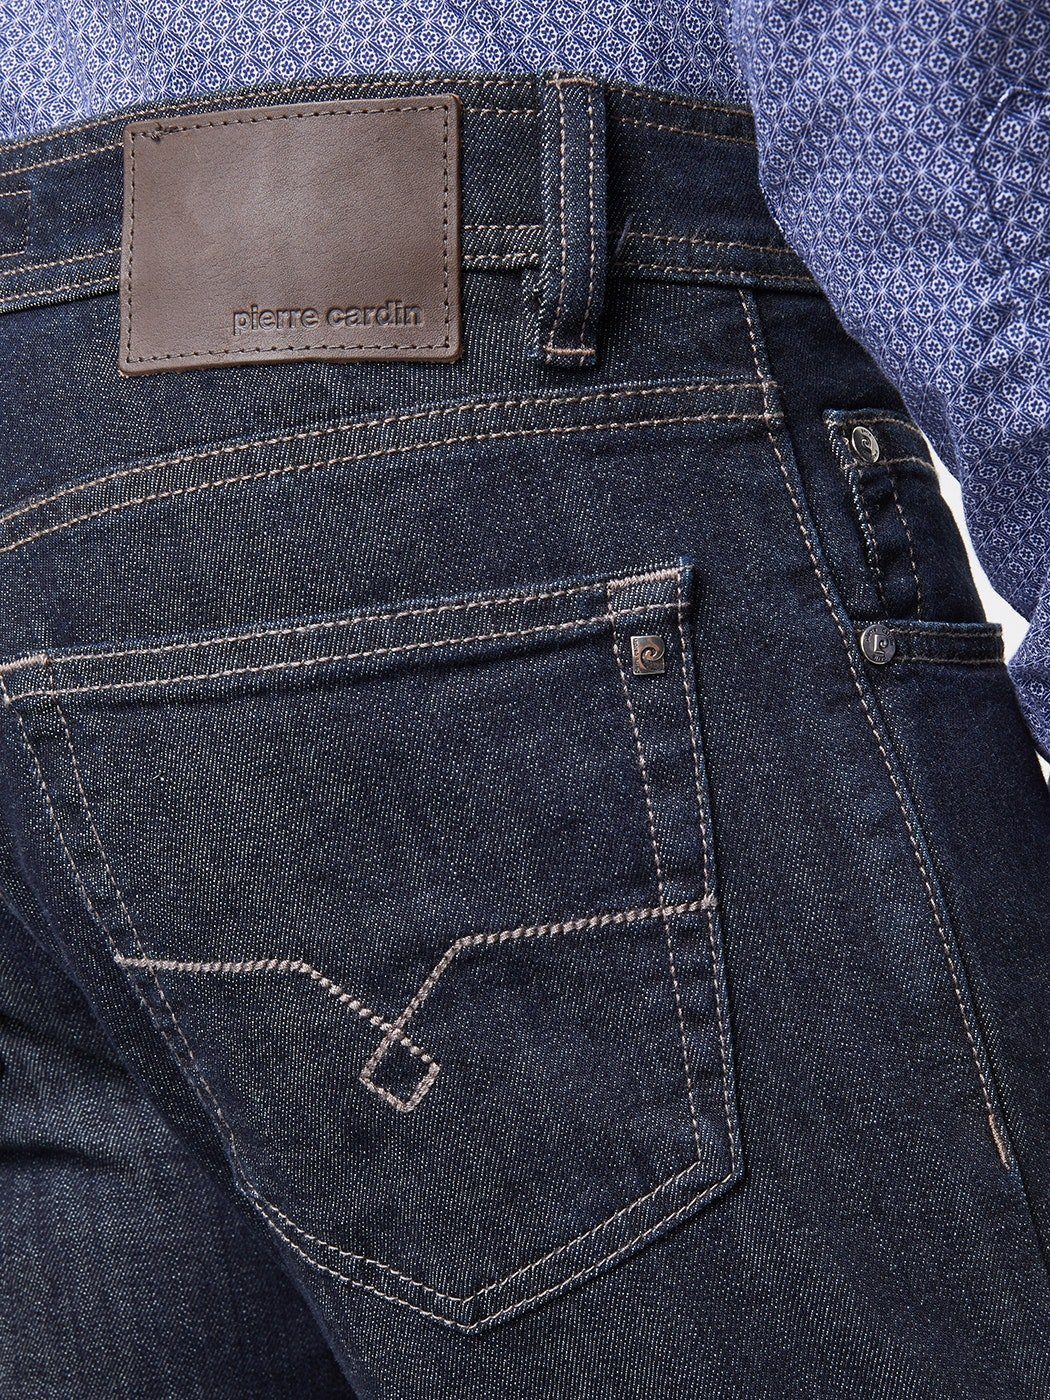 THERMO rinse 5-Pocket-Jeans indigo CARDIN dark DEAUVILLE Cardin 7010.01 Pierre 3496 PIERRE -